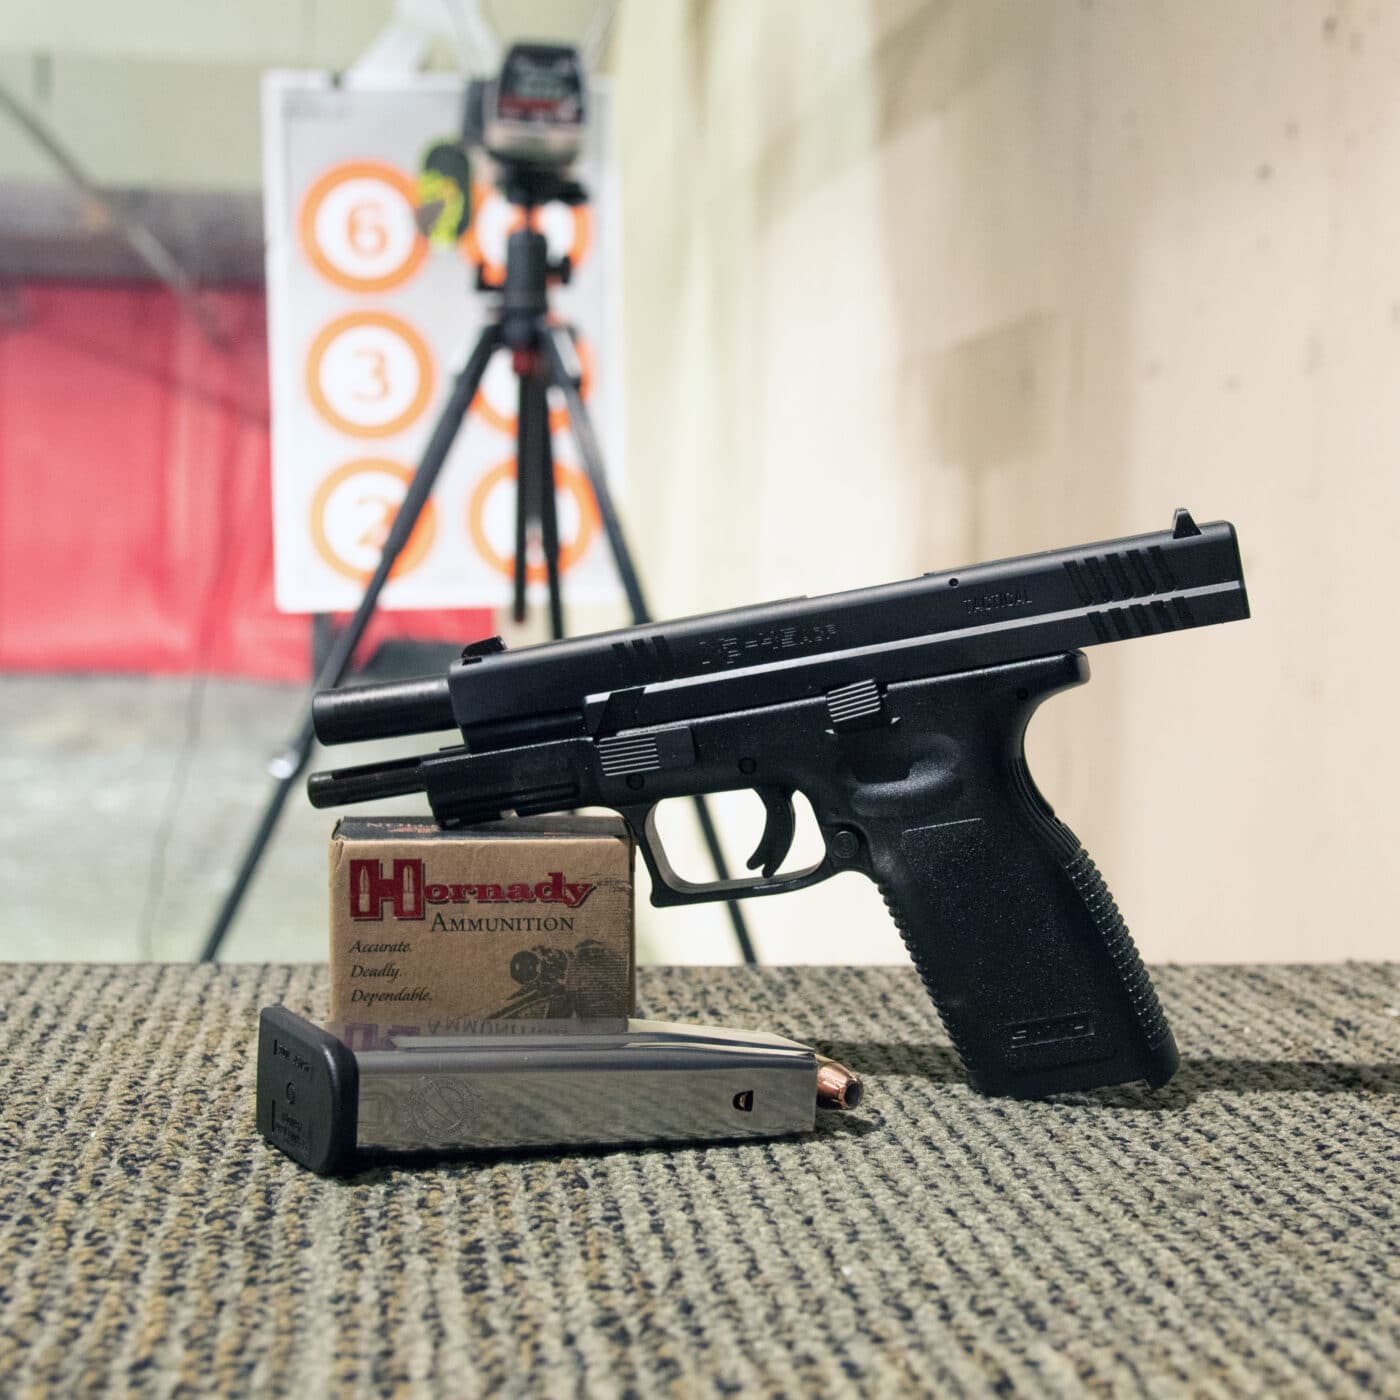 Range testing the Springfield XD .45 Tactical pistol